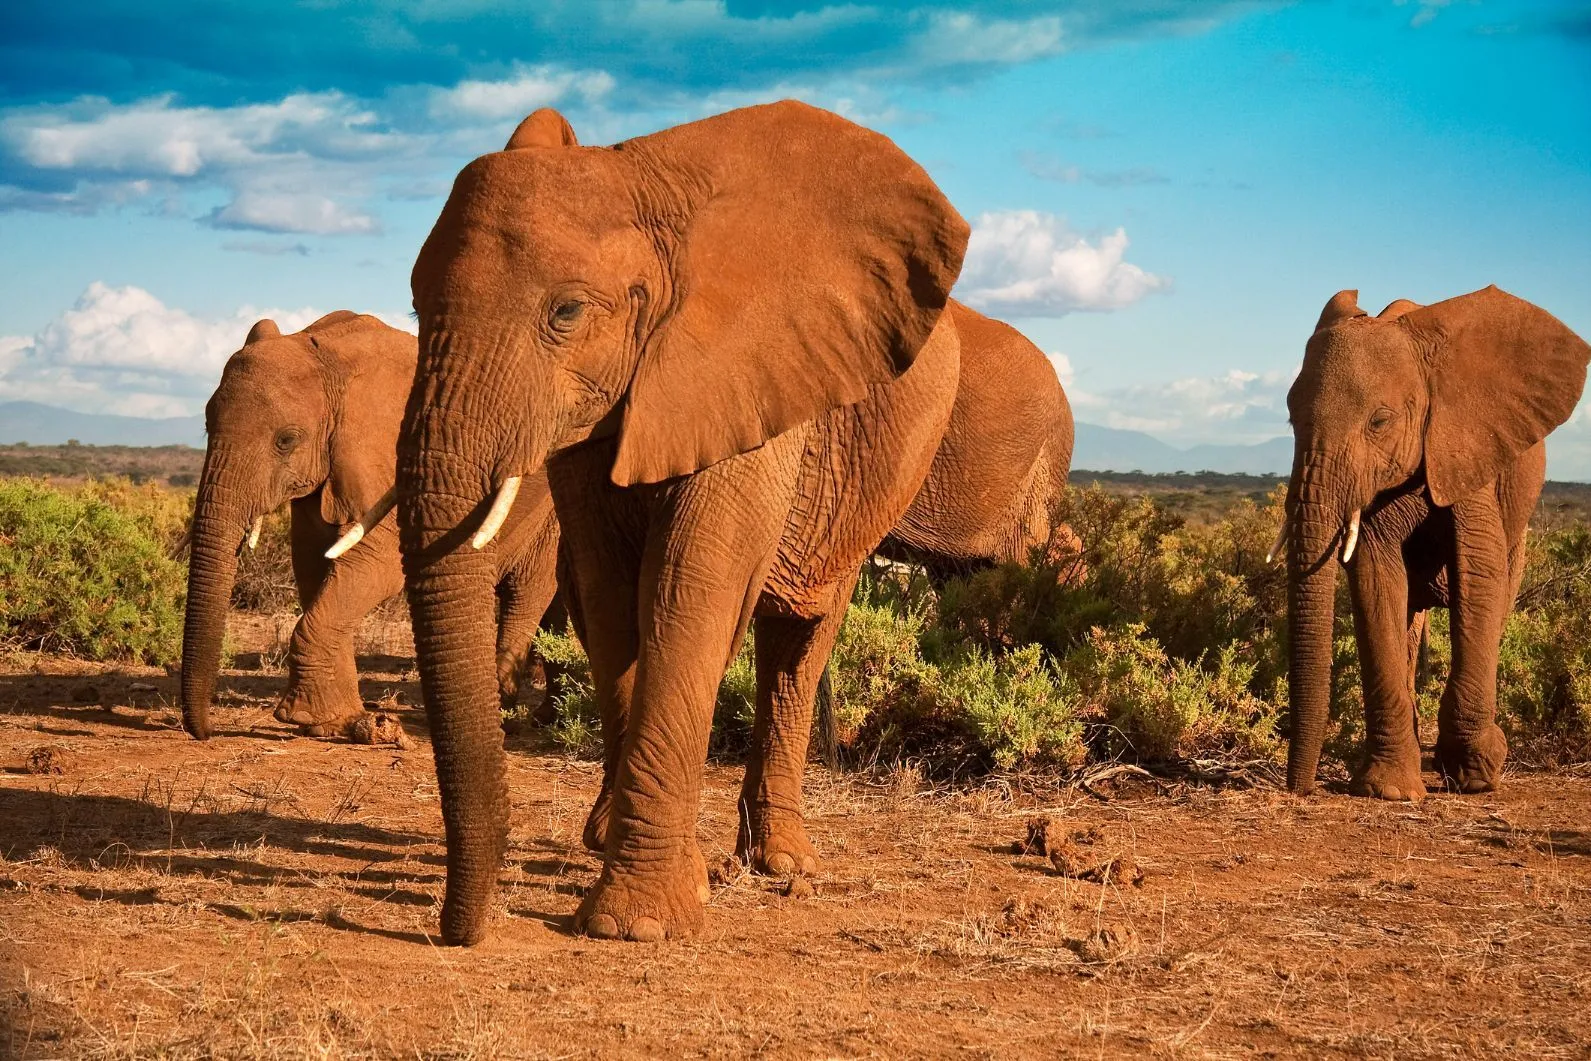 kenya safari packages - Elephants